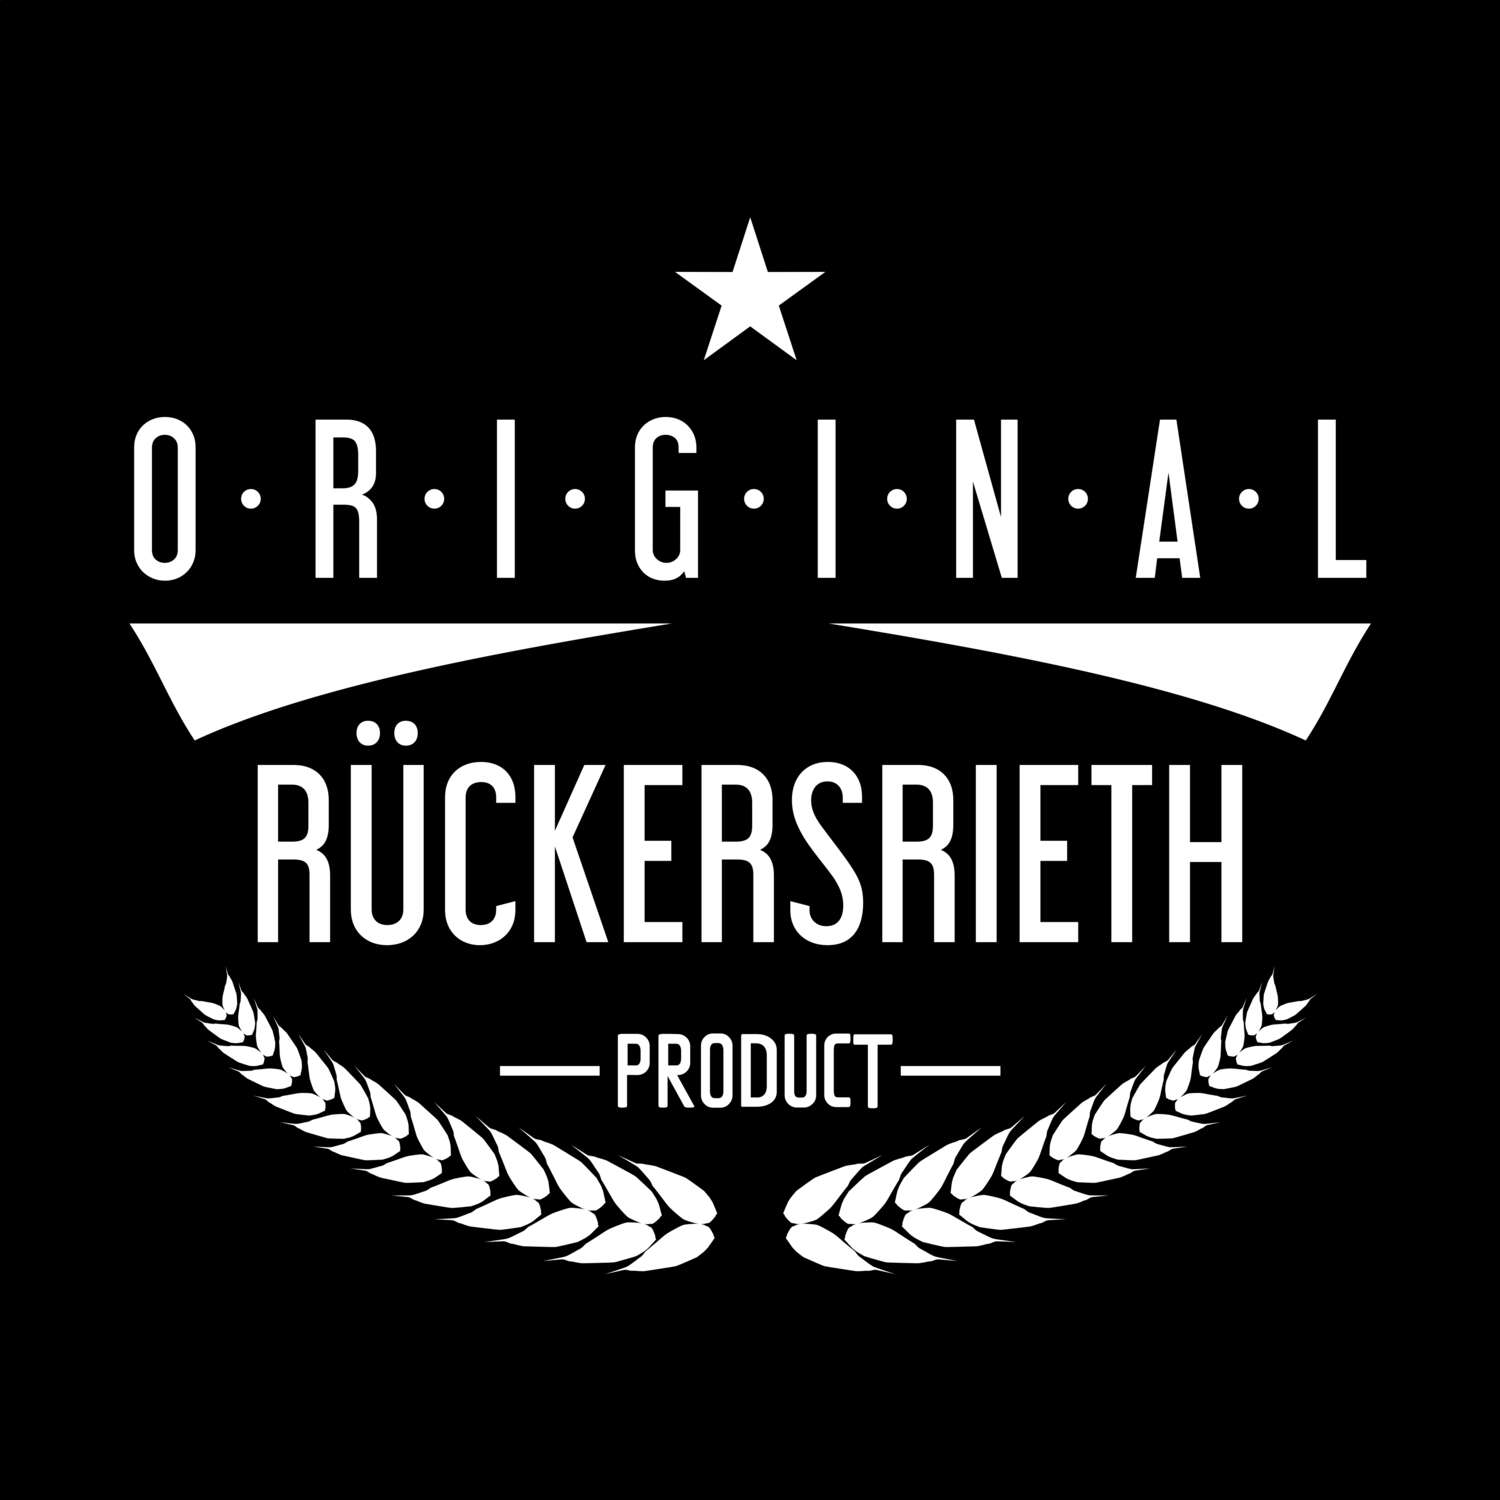 Rückersrieth T-Shirt »Original Product«